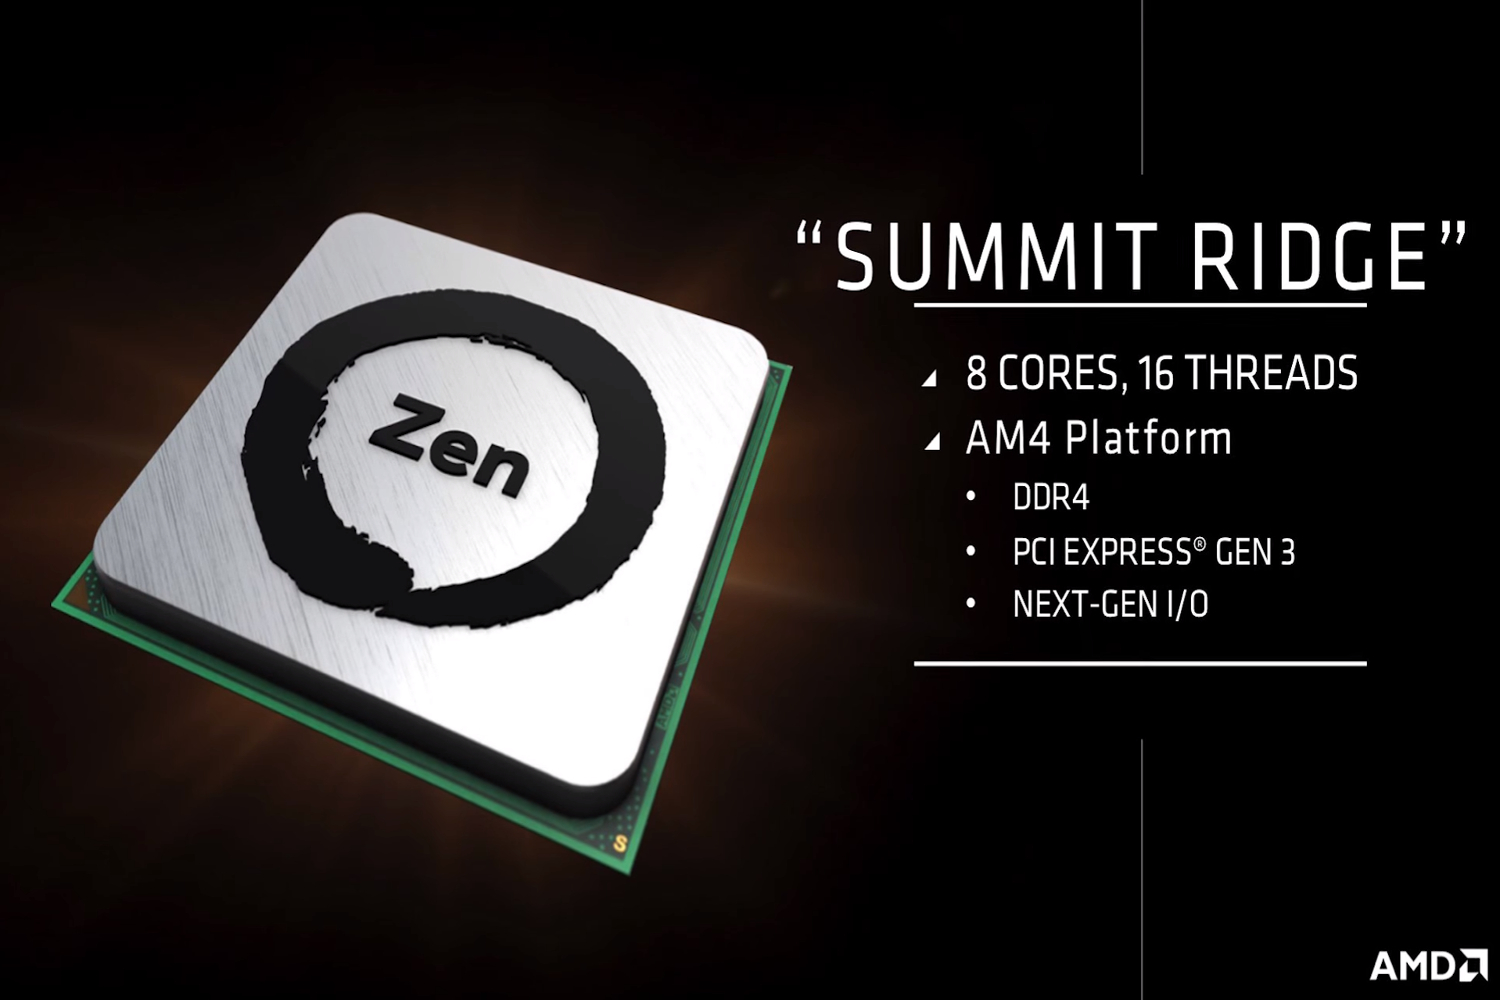 amd zen summit ridge details idf 2016 processor